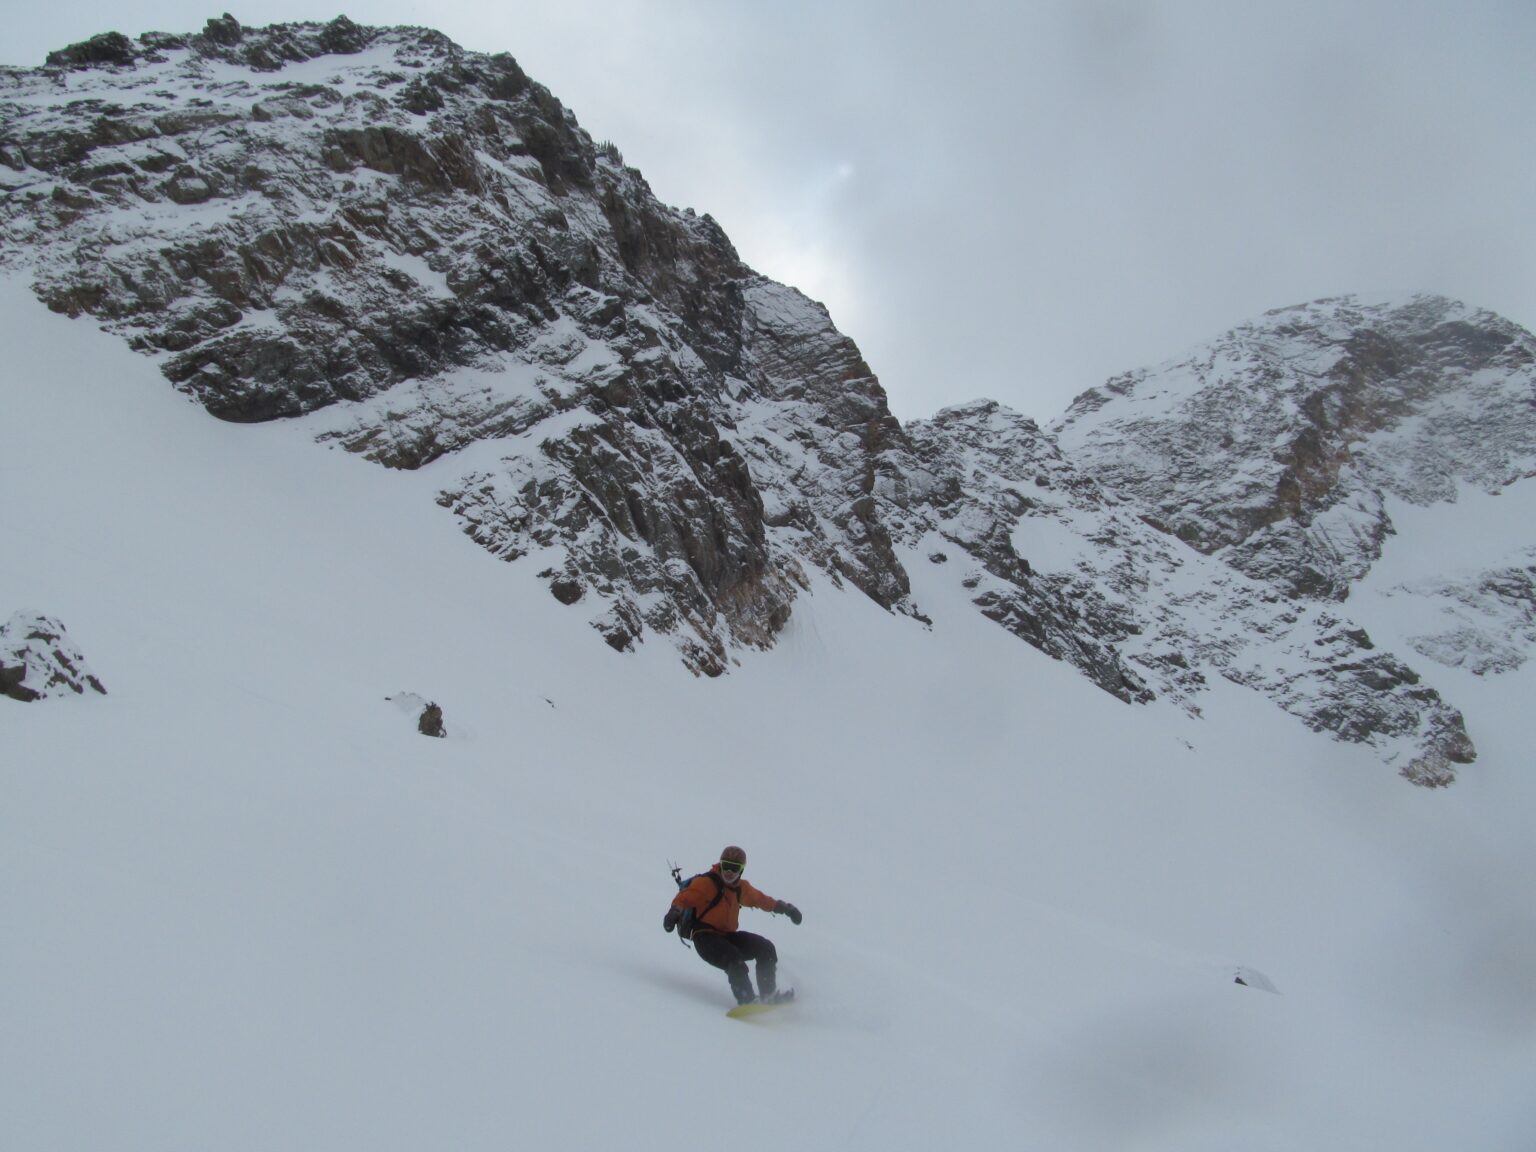 Snowboarding down the north ridge of Dromedary Peak